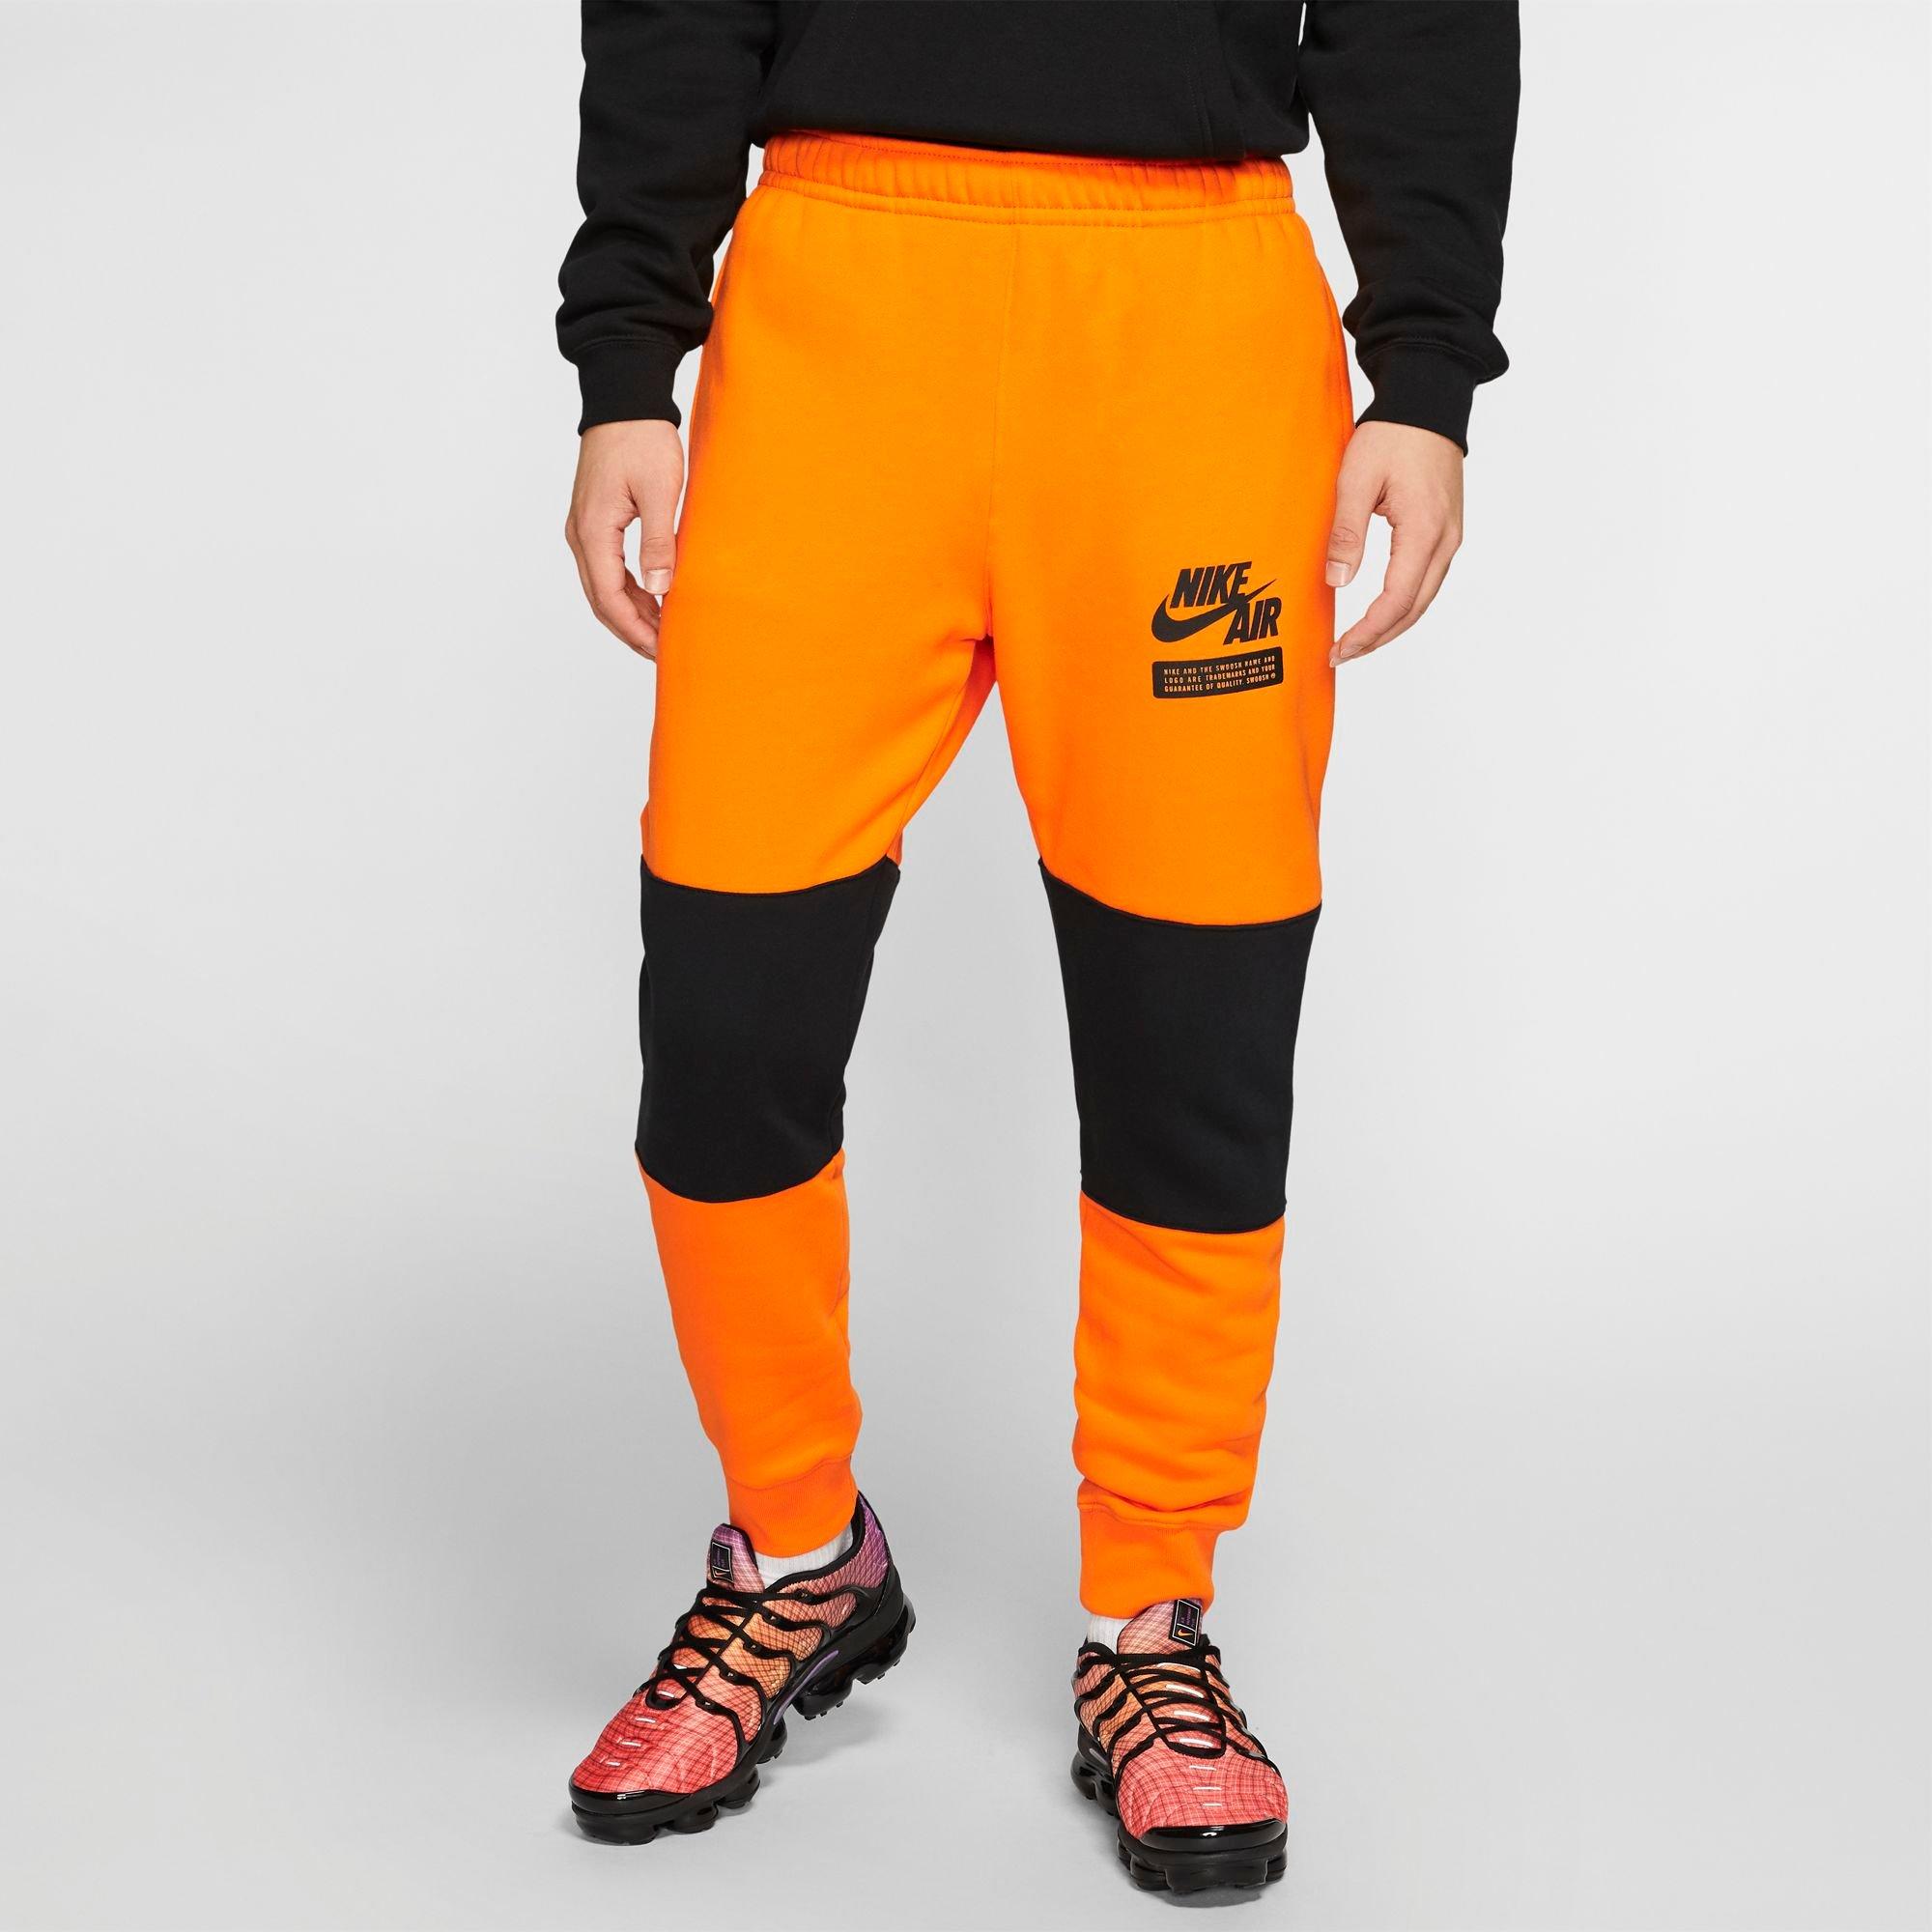 orange and black nike joggers